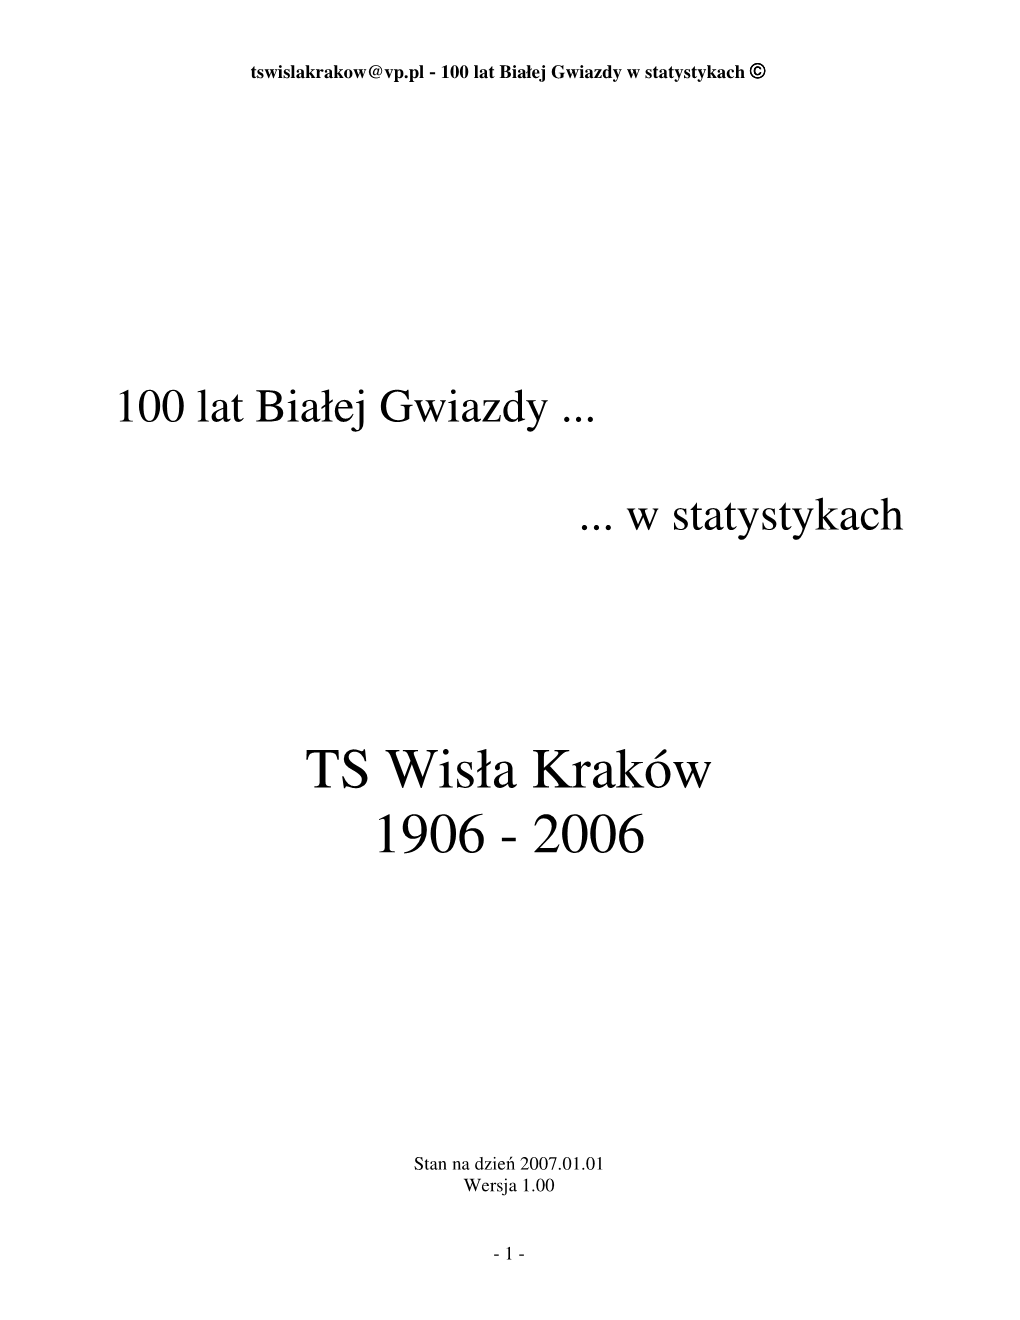 TS Wisla Krakow